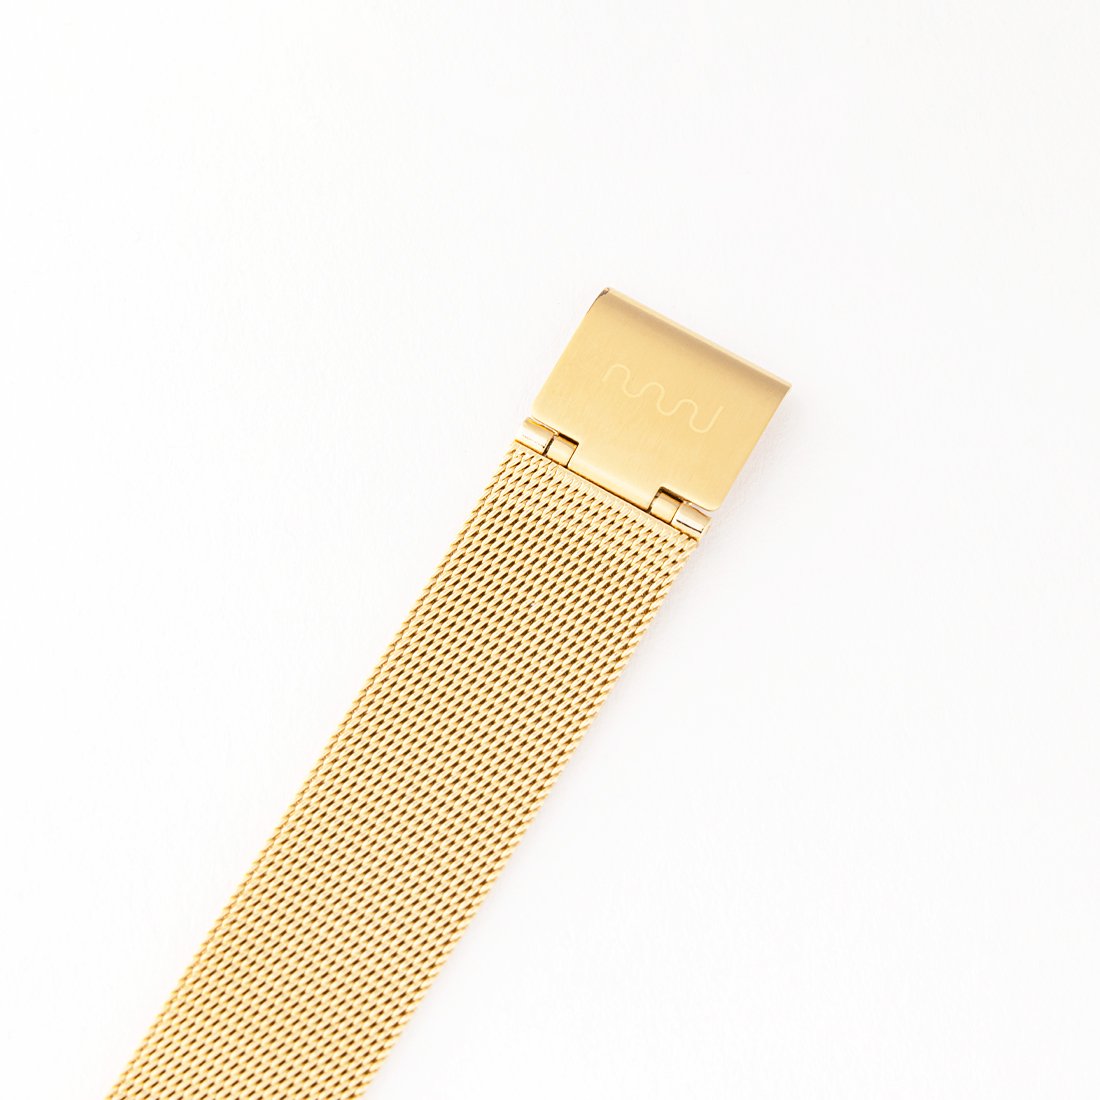 NUWL EVEN DOT MESH STRAP -GOLD- カジュアル 腕時計